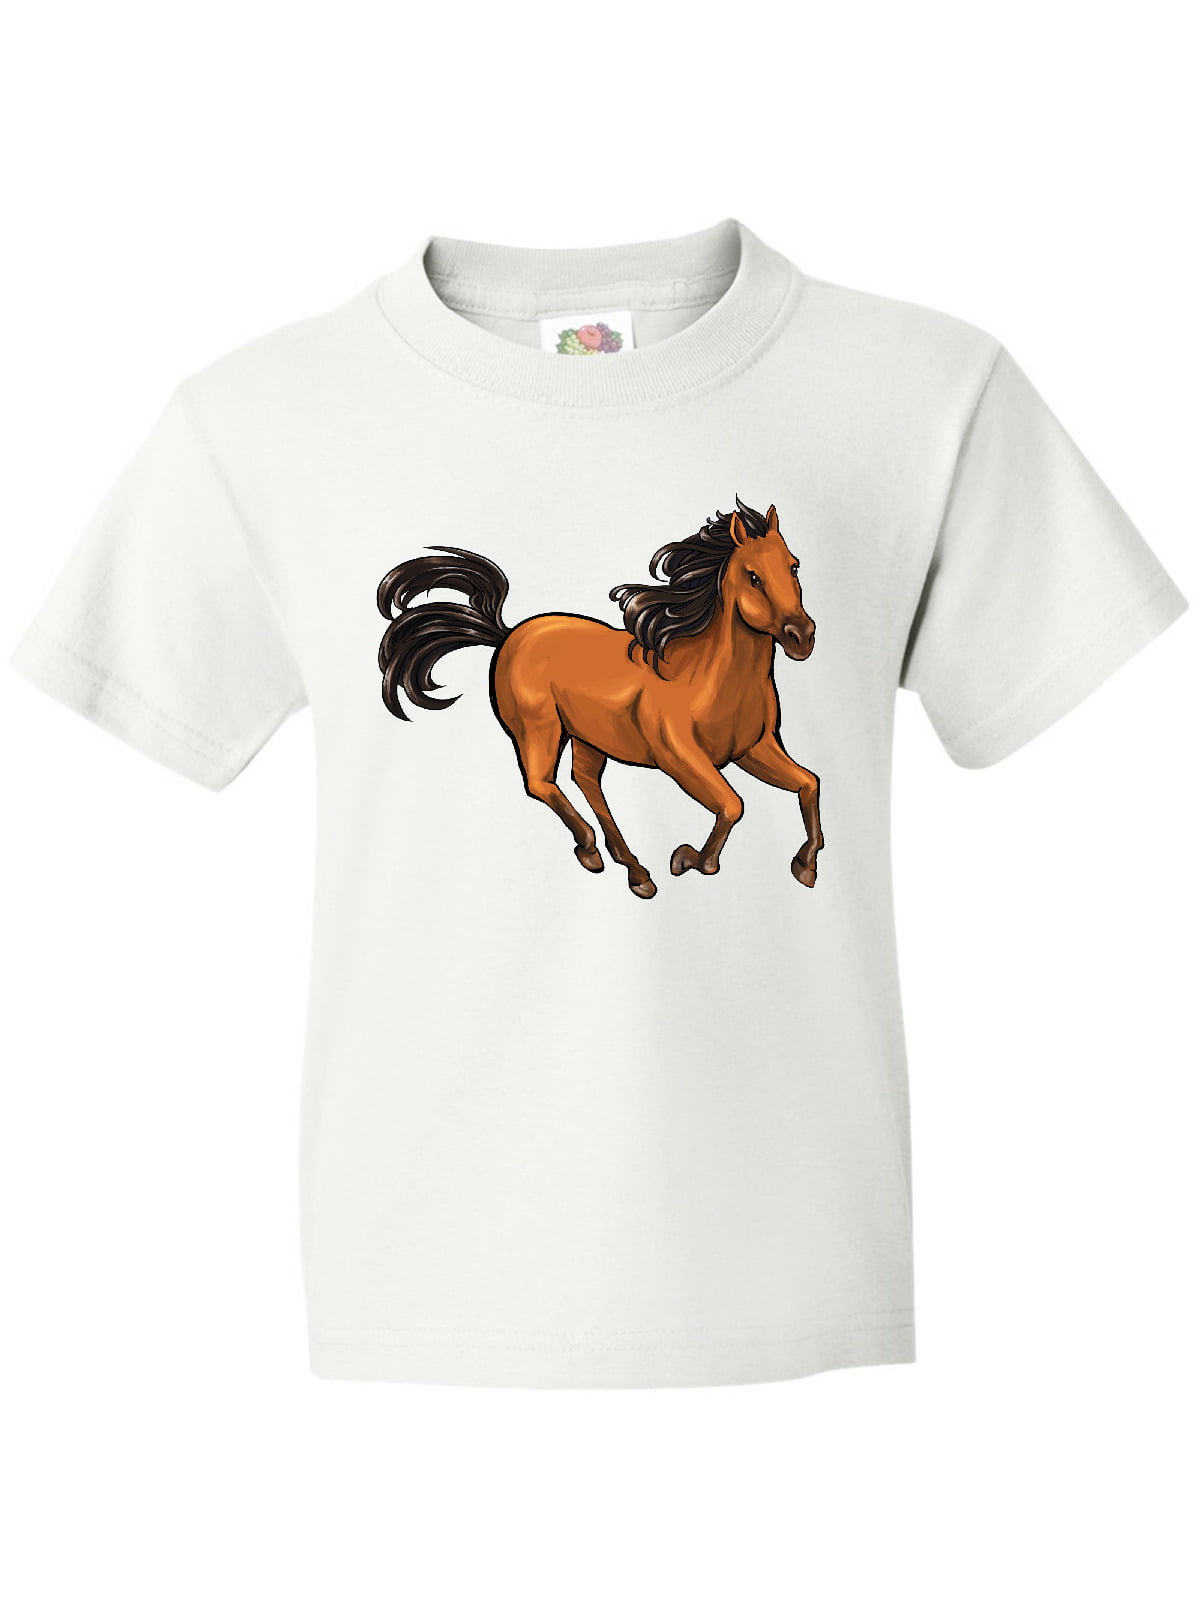 Pair of Horses Long Sleeve T-Shirt Mustangs Horseback Riding Pony Stallion Tee